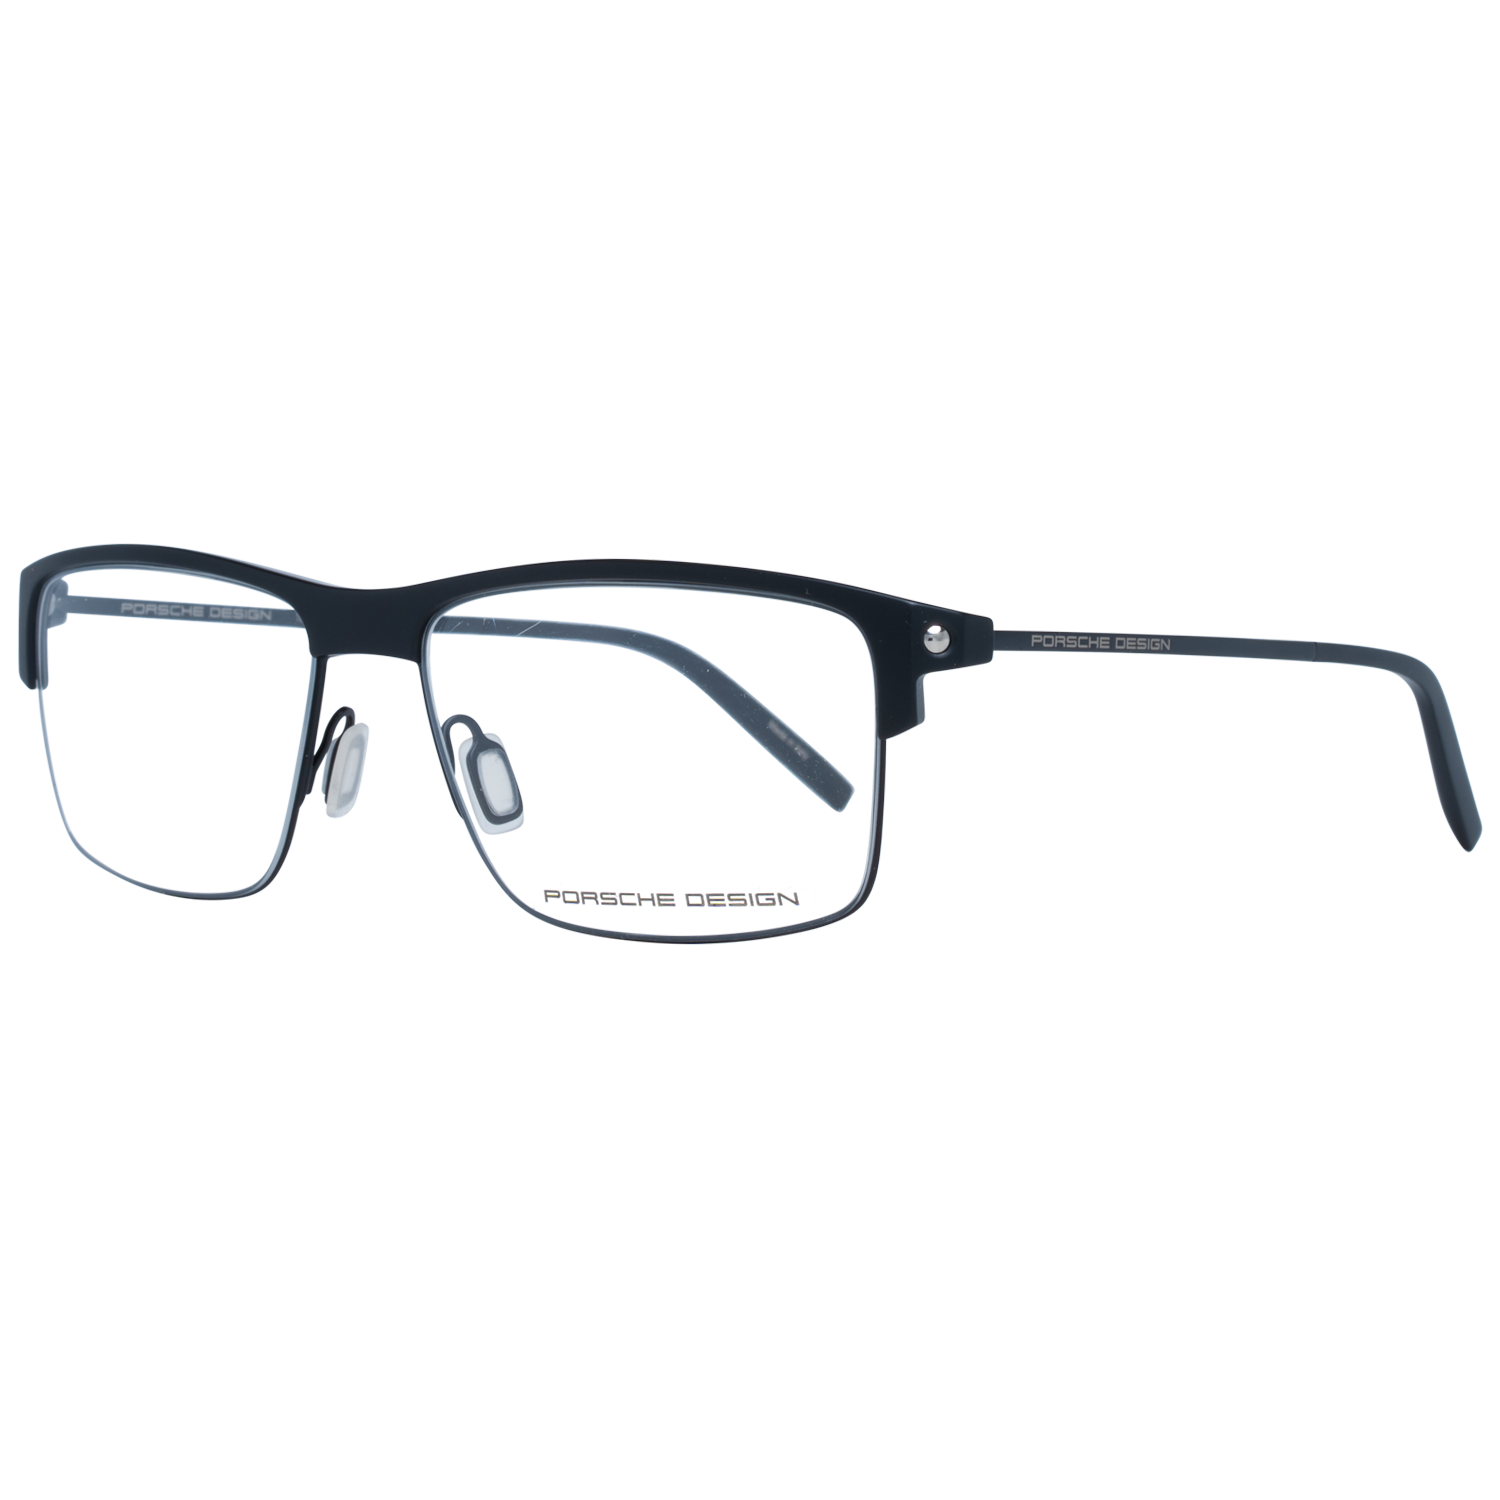 Porsche Design Eyeglasses Porsche Design Glasses Frames P8361 A 55mm Eyeglasses Eyewear UK USA Australia 